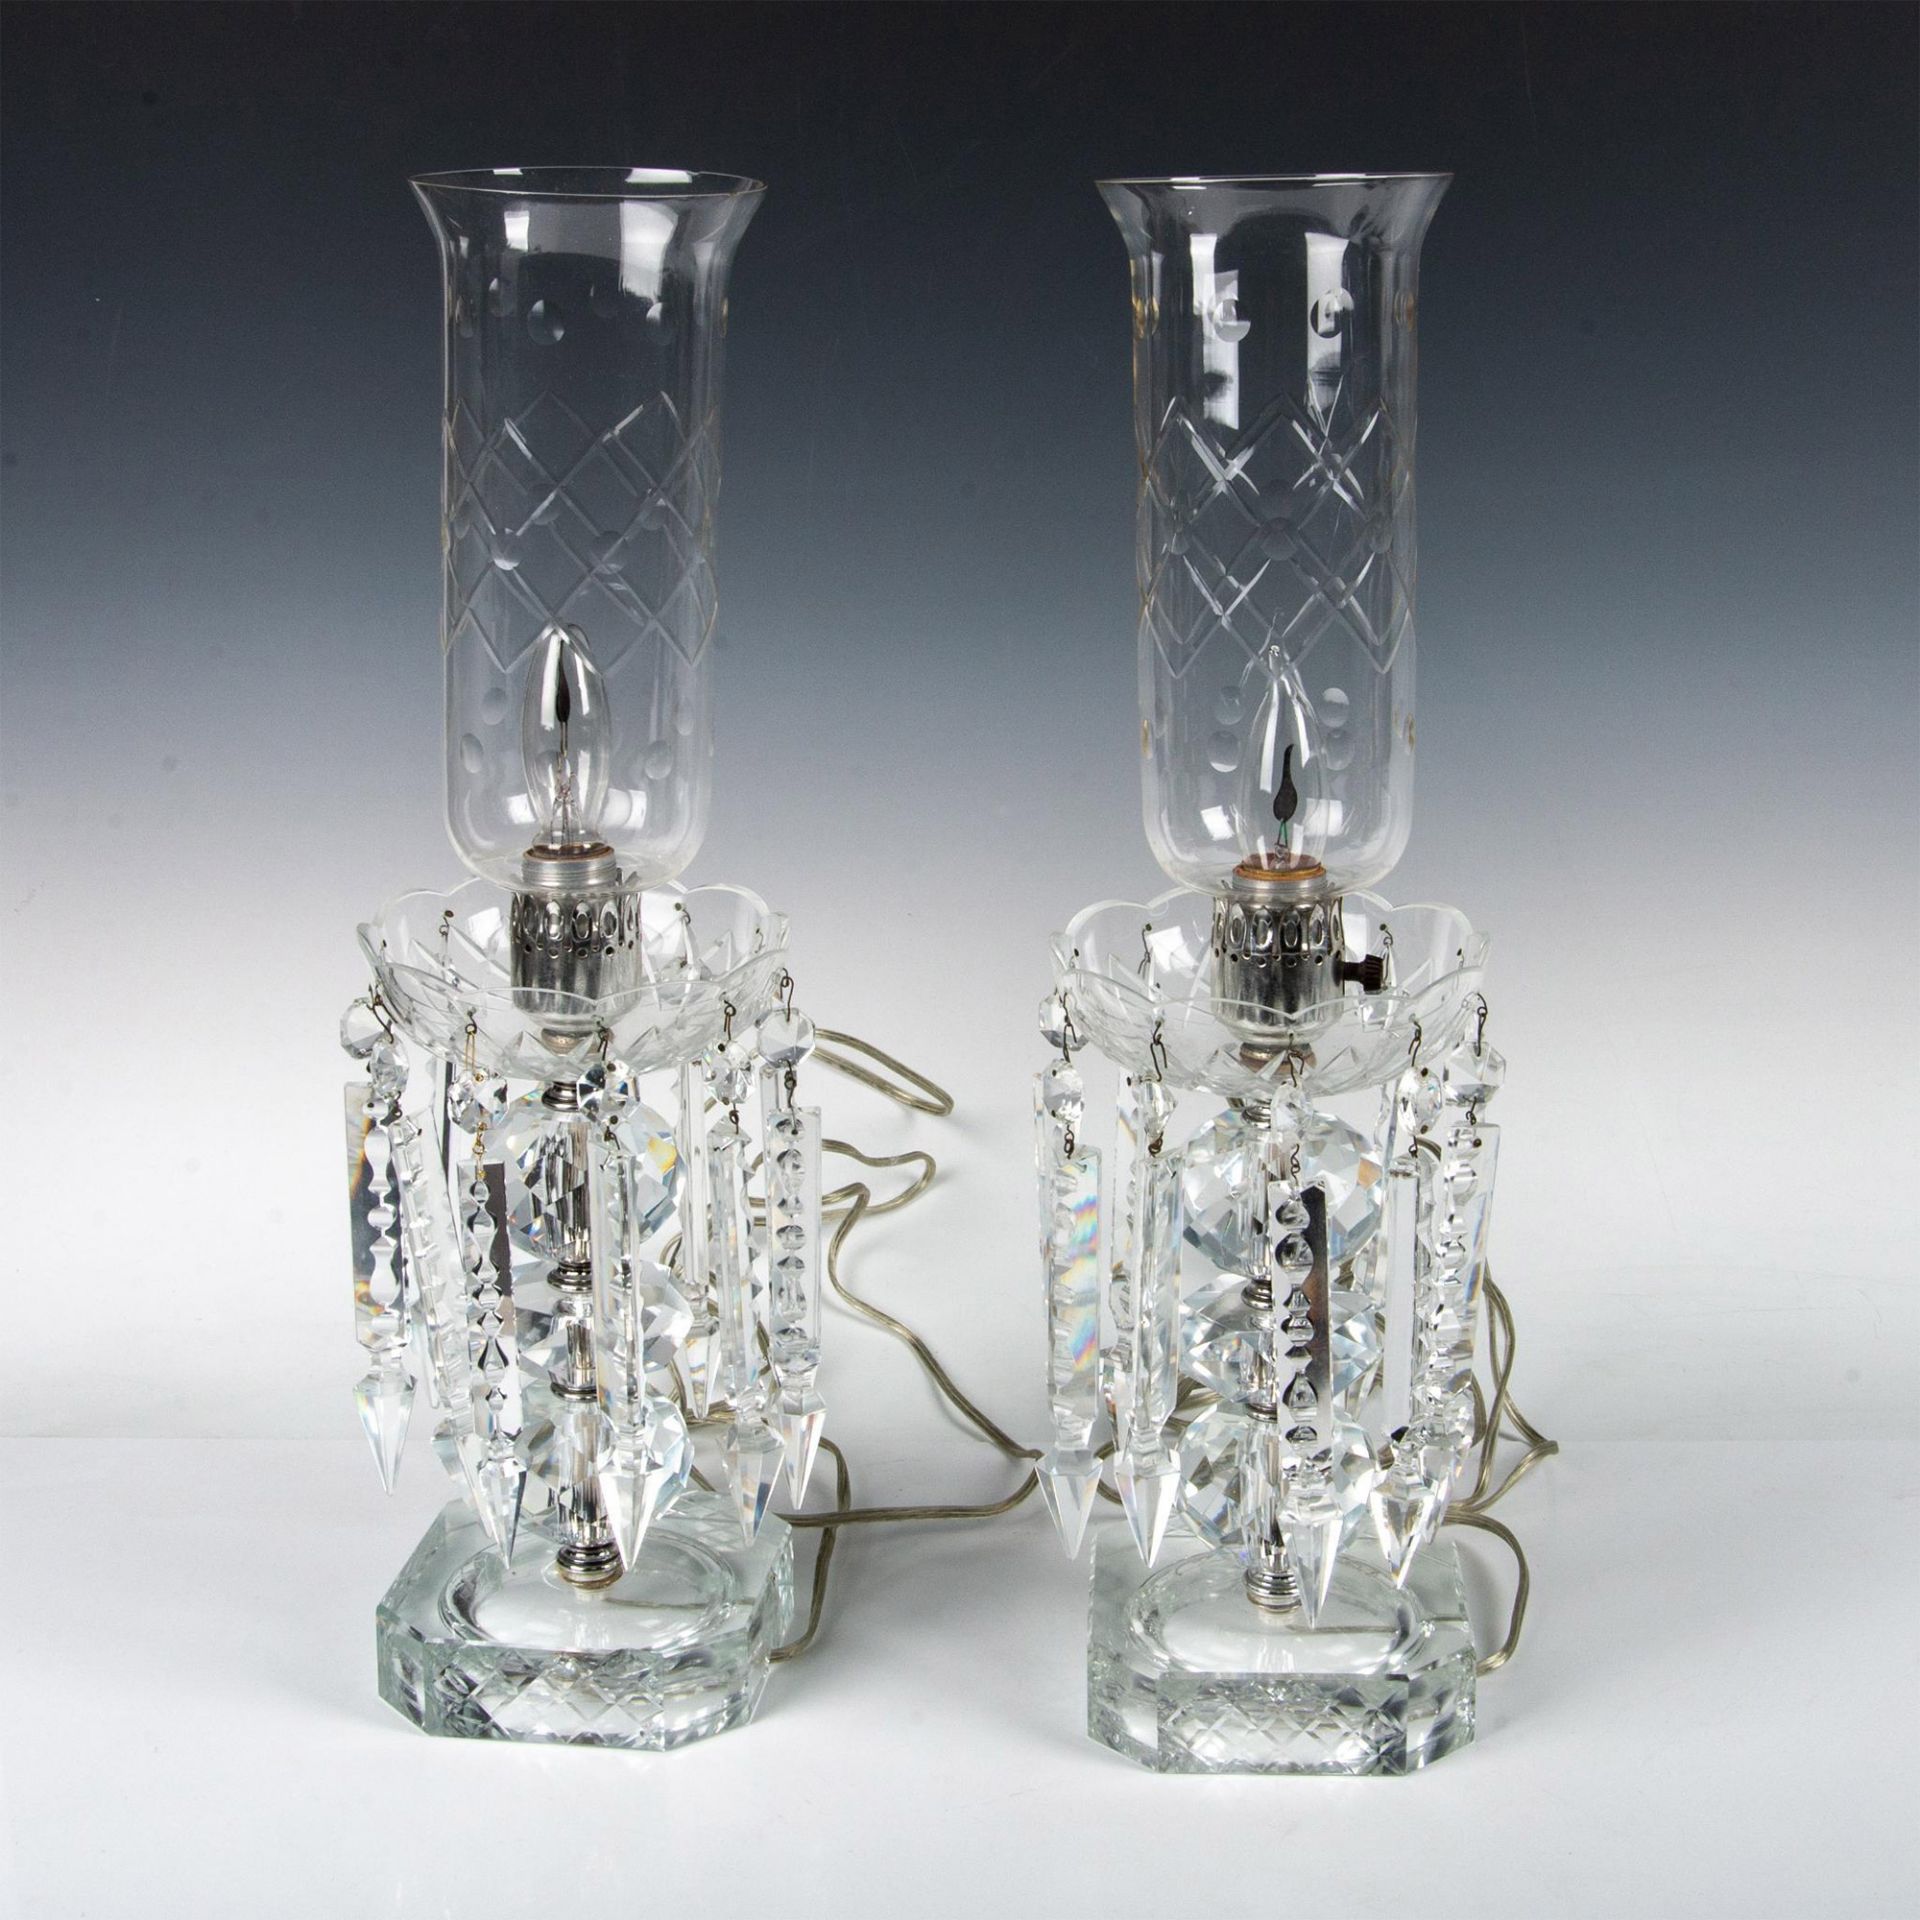 Pair of MCM Crystal Boudoir Lamps - Image 5 of 7